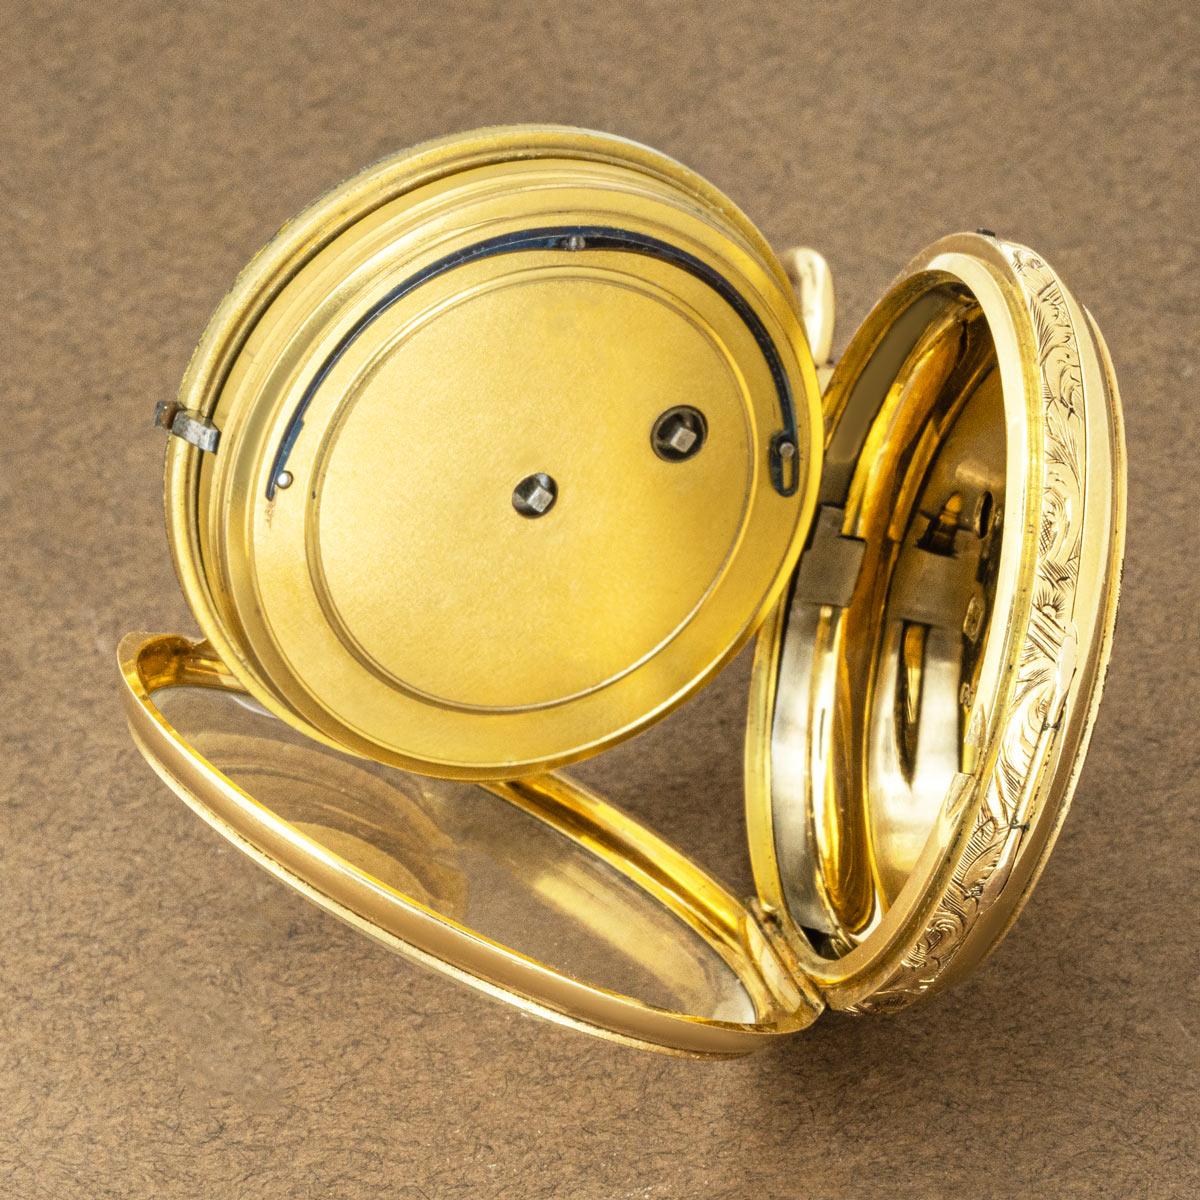 John Cragg. A Rare Heavy Gold Cabriolet Keywind Pocket Watch C1850 For Sale 1